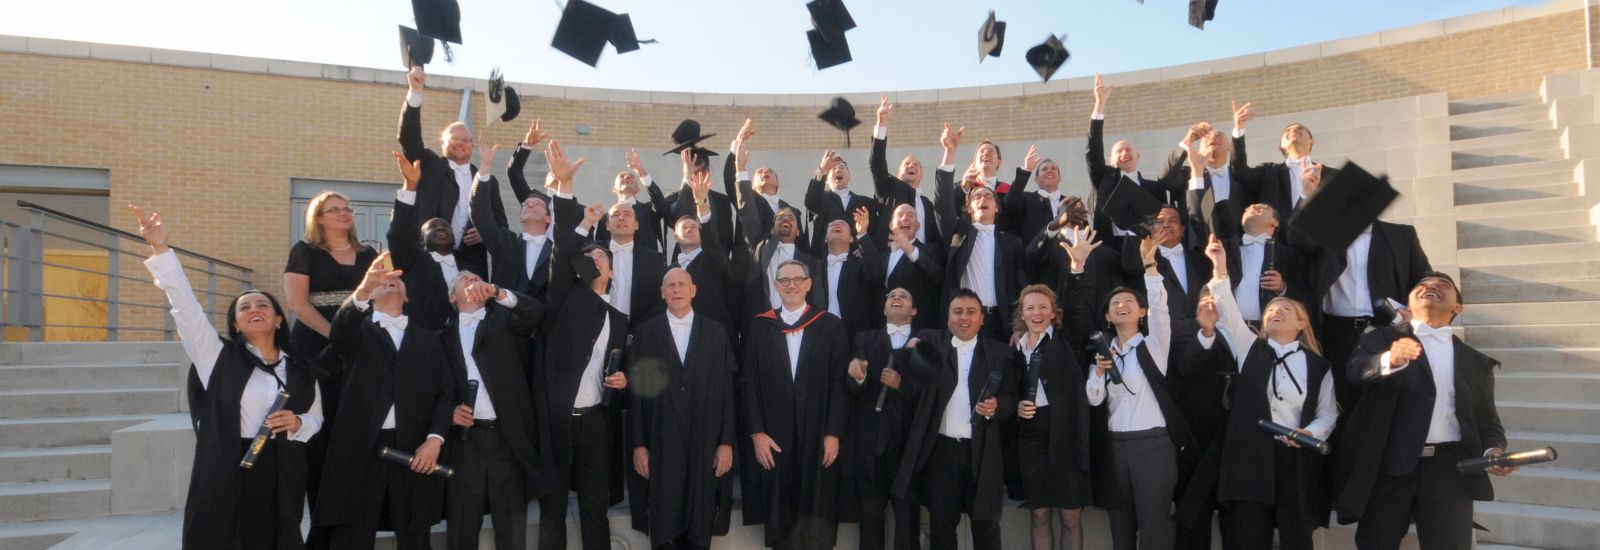 Oxford graduates 